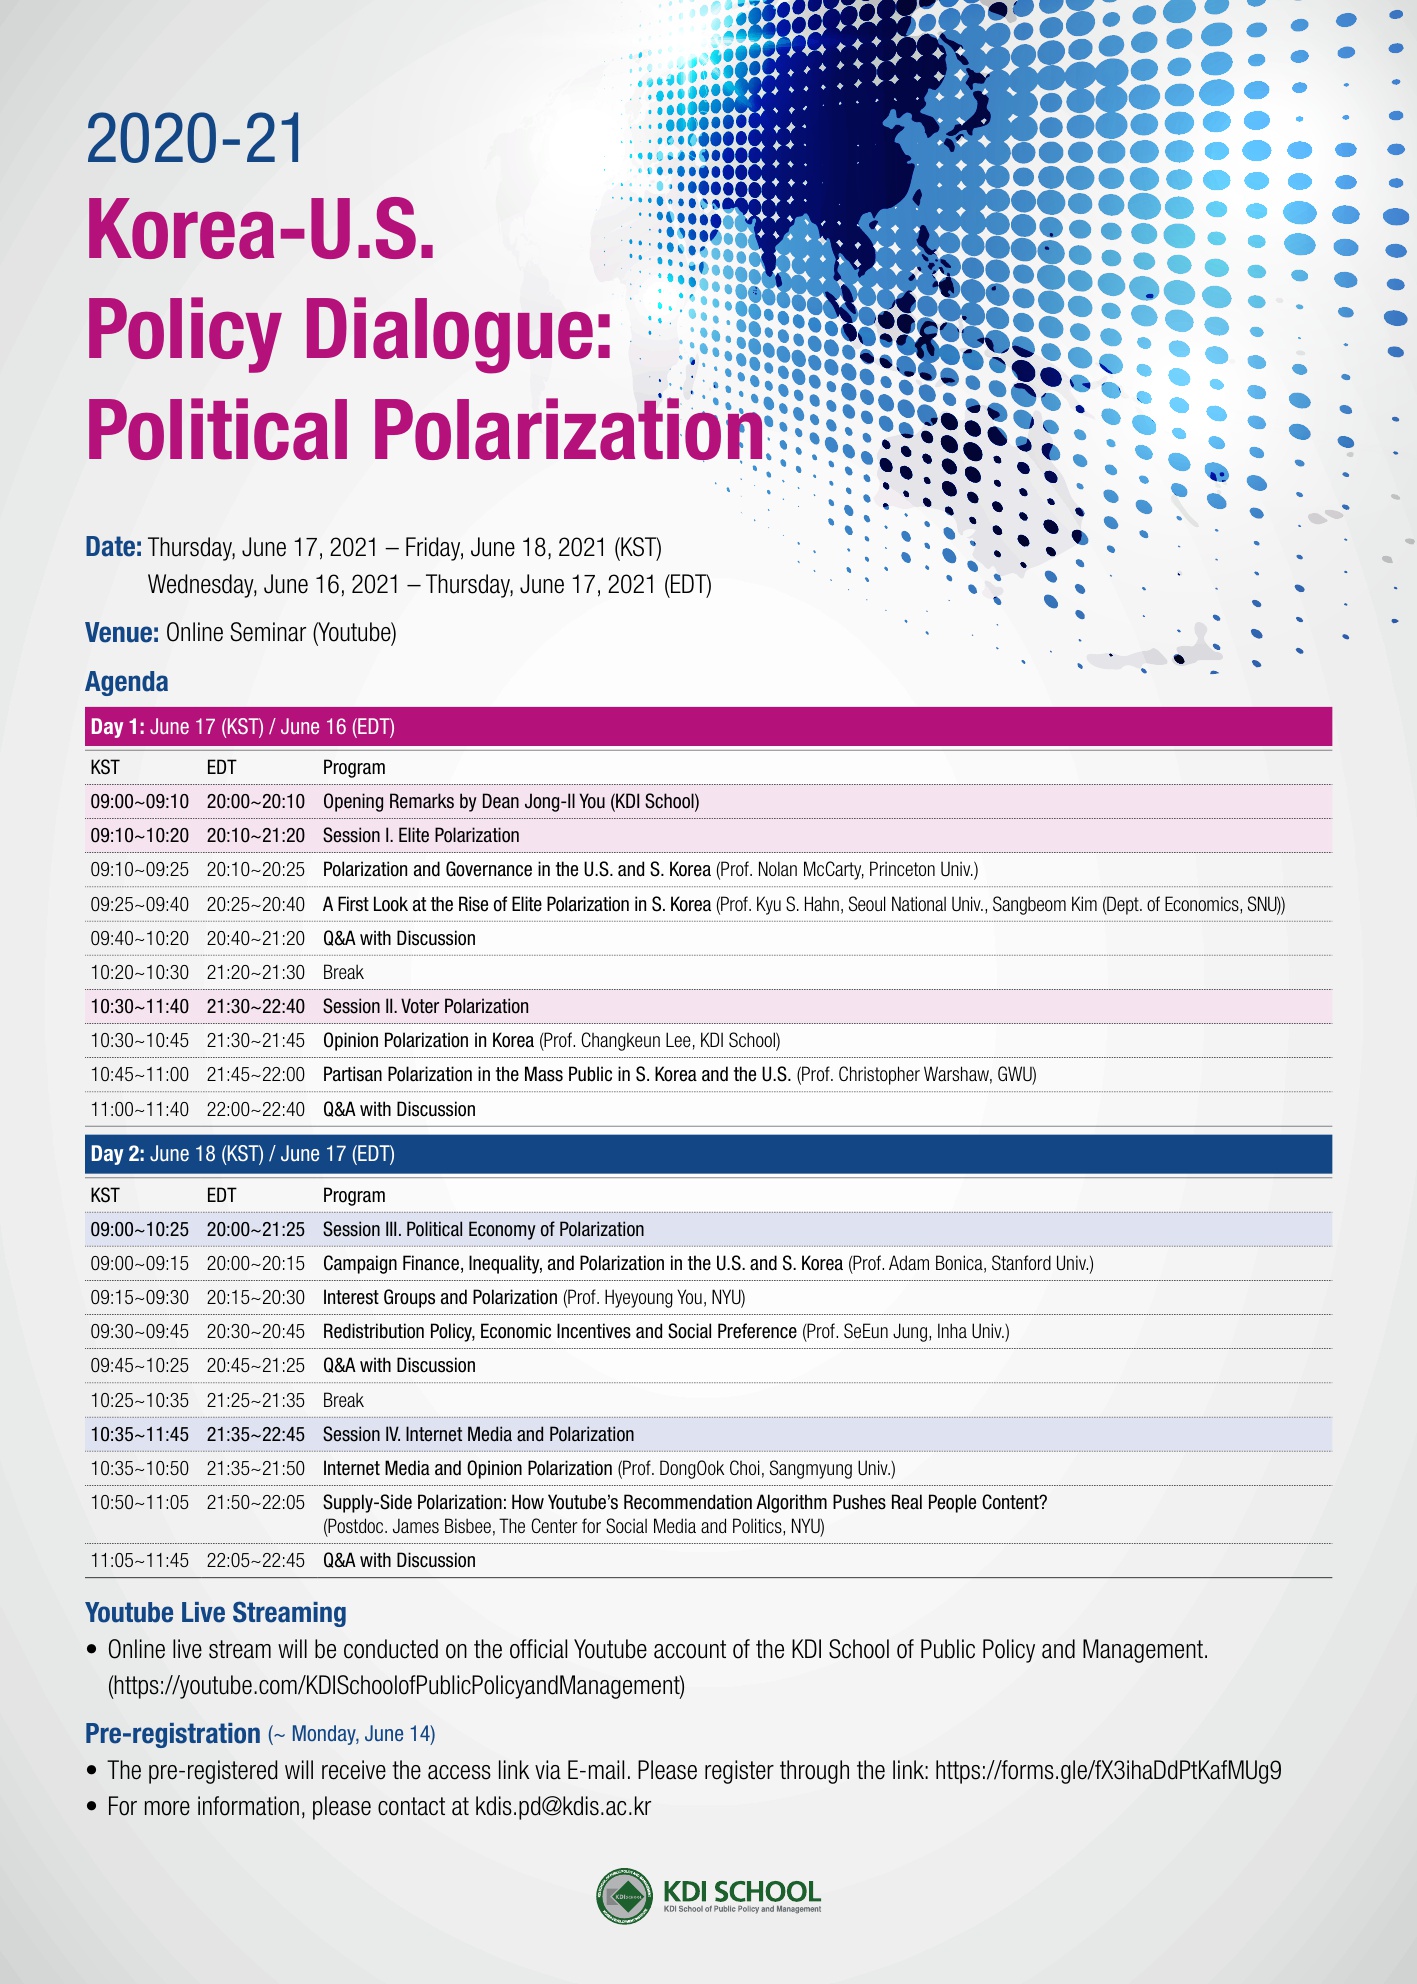 [Invitation] 2020-21 Korea-U.S. Policy Dialogue: Political Polarization